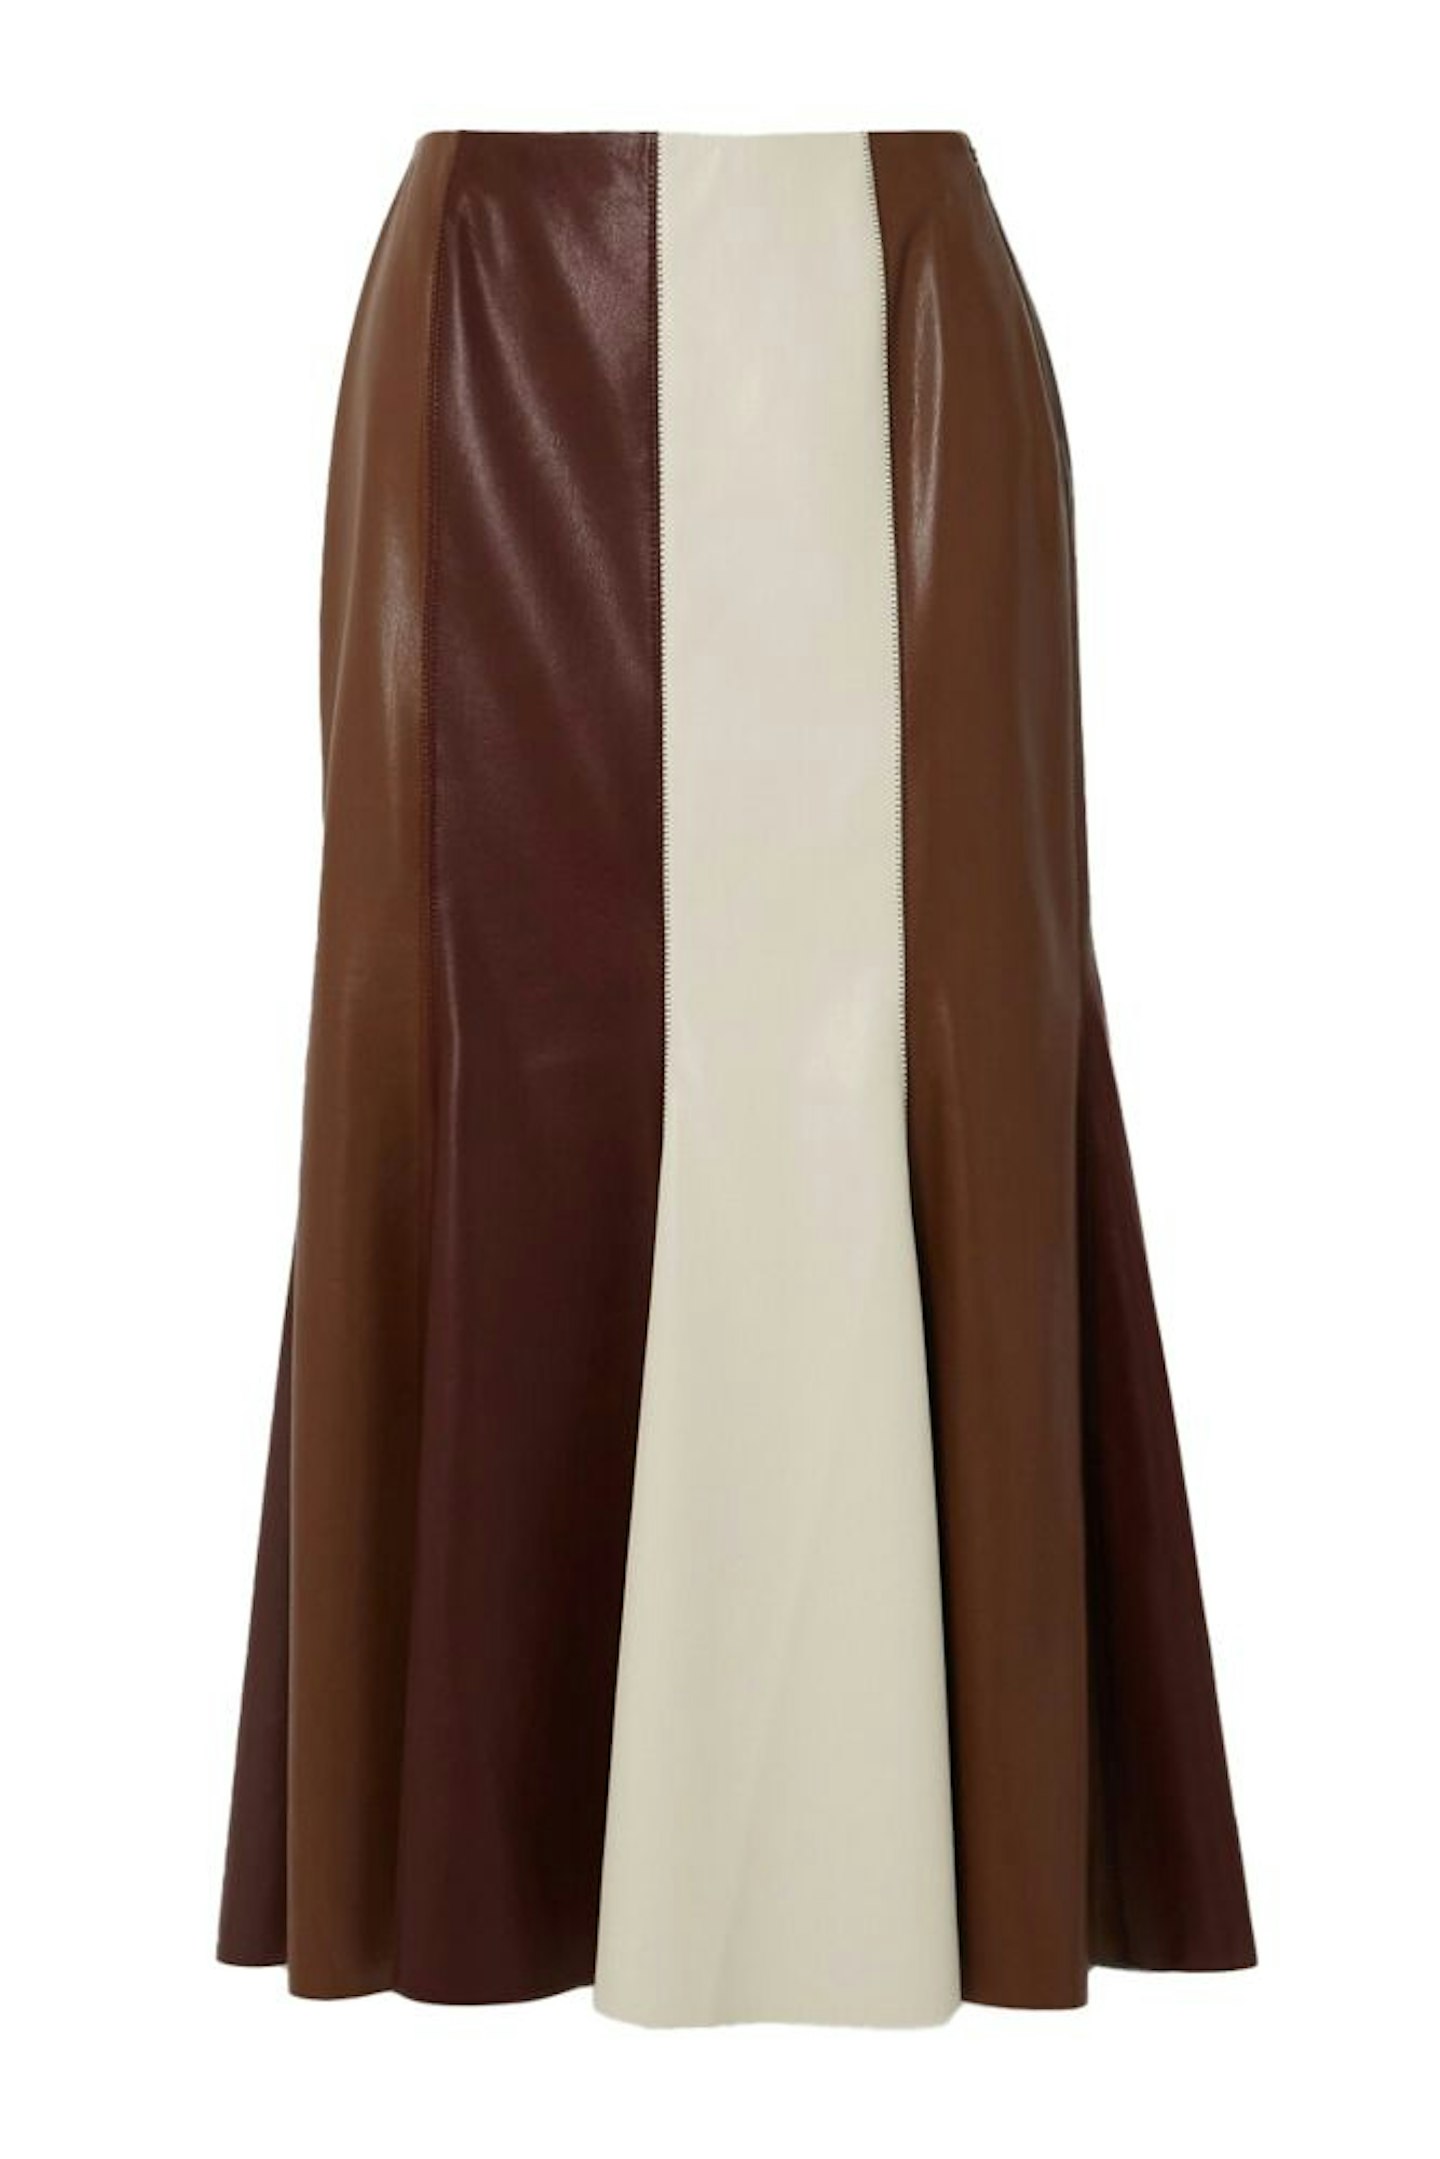 Nanushka, Vegan Leather Skirt, £365